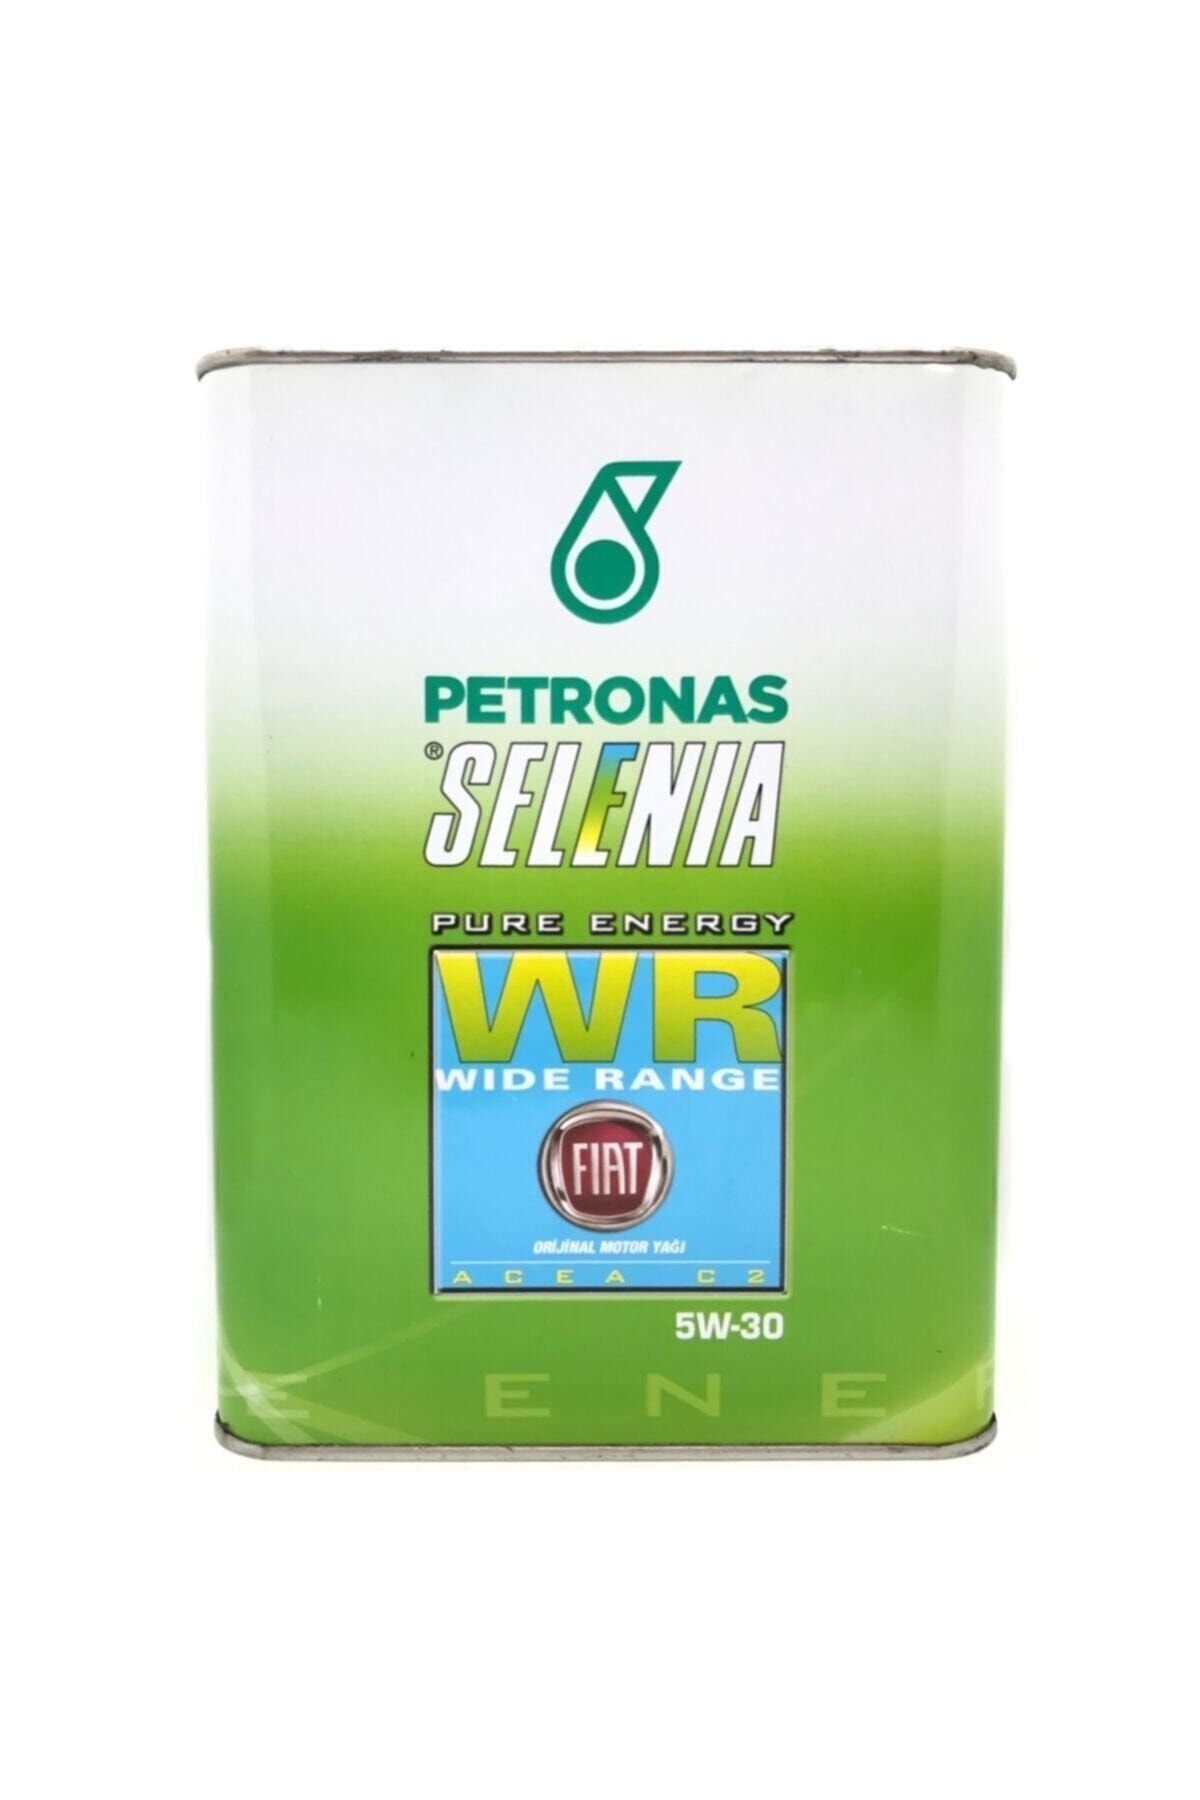 Petronas Selenia Wr Pure Energy 5w30 3.2 Litre Motor Yağı